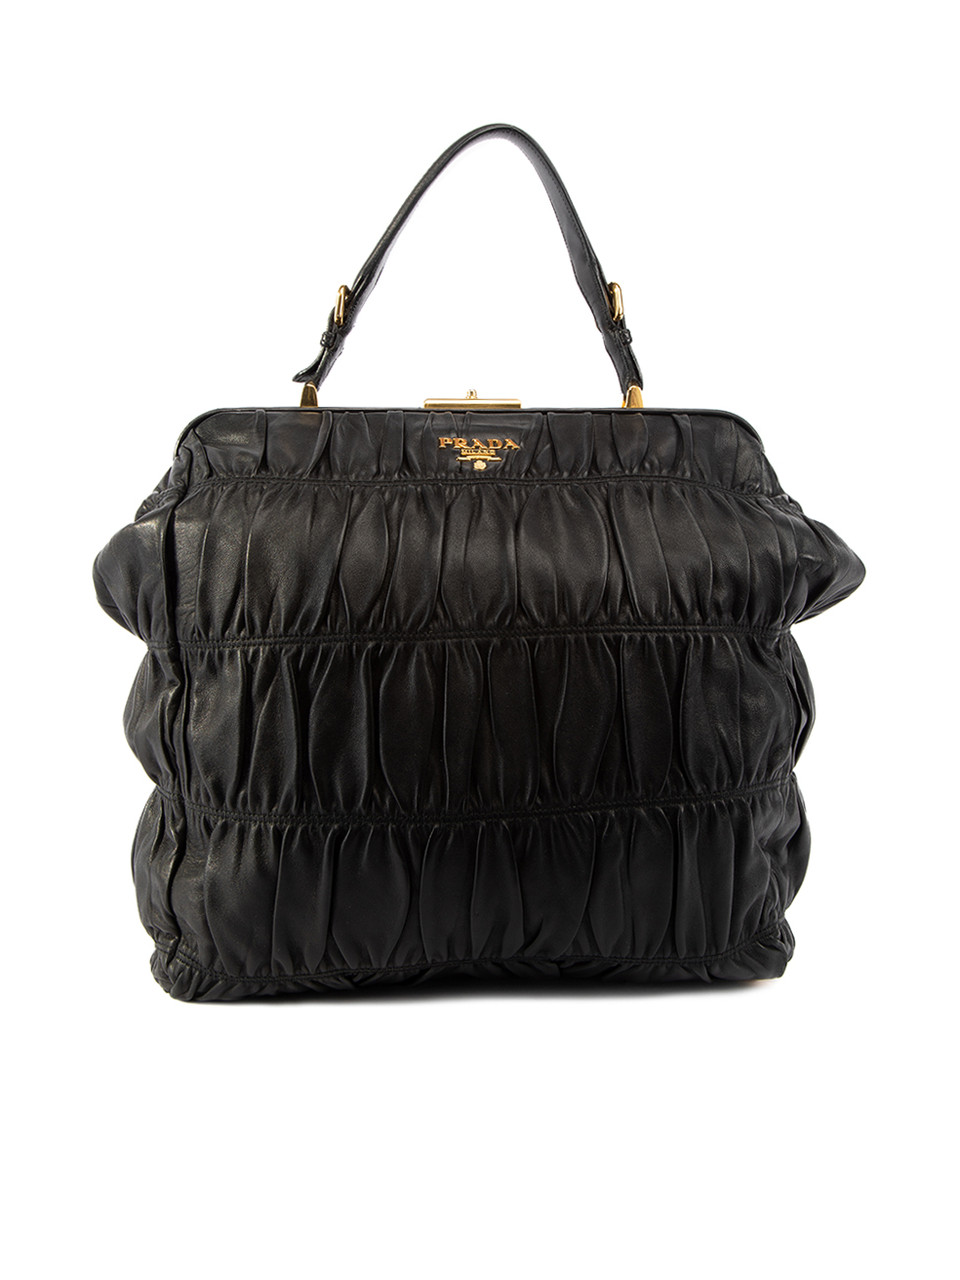 Prada Black Gaufre Leather Handbag